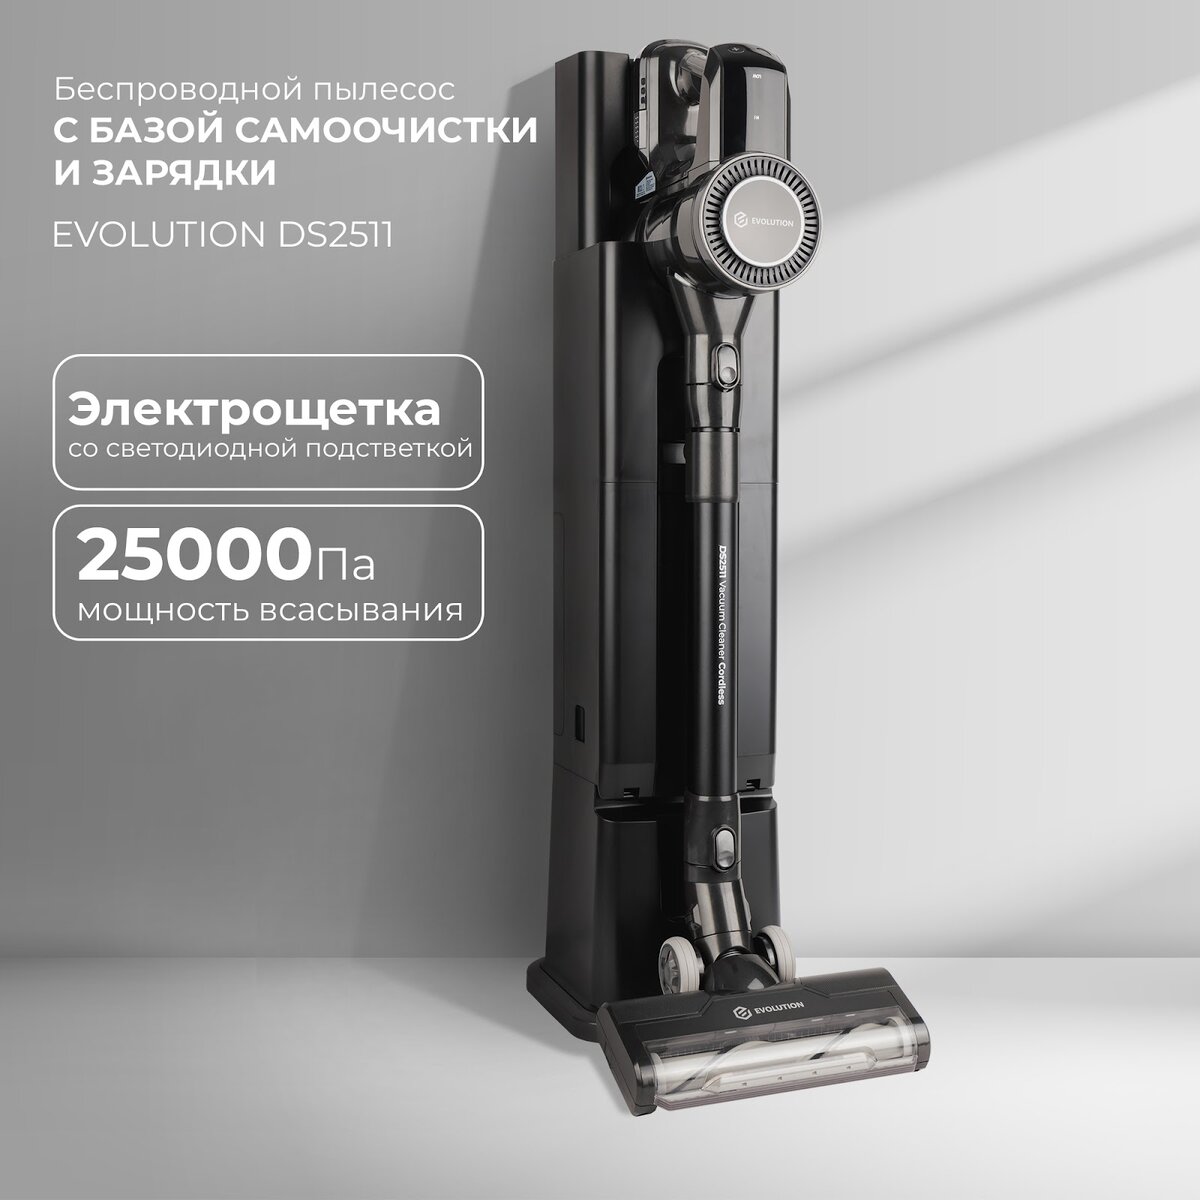 Evolution Smart Clean DS2511